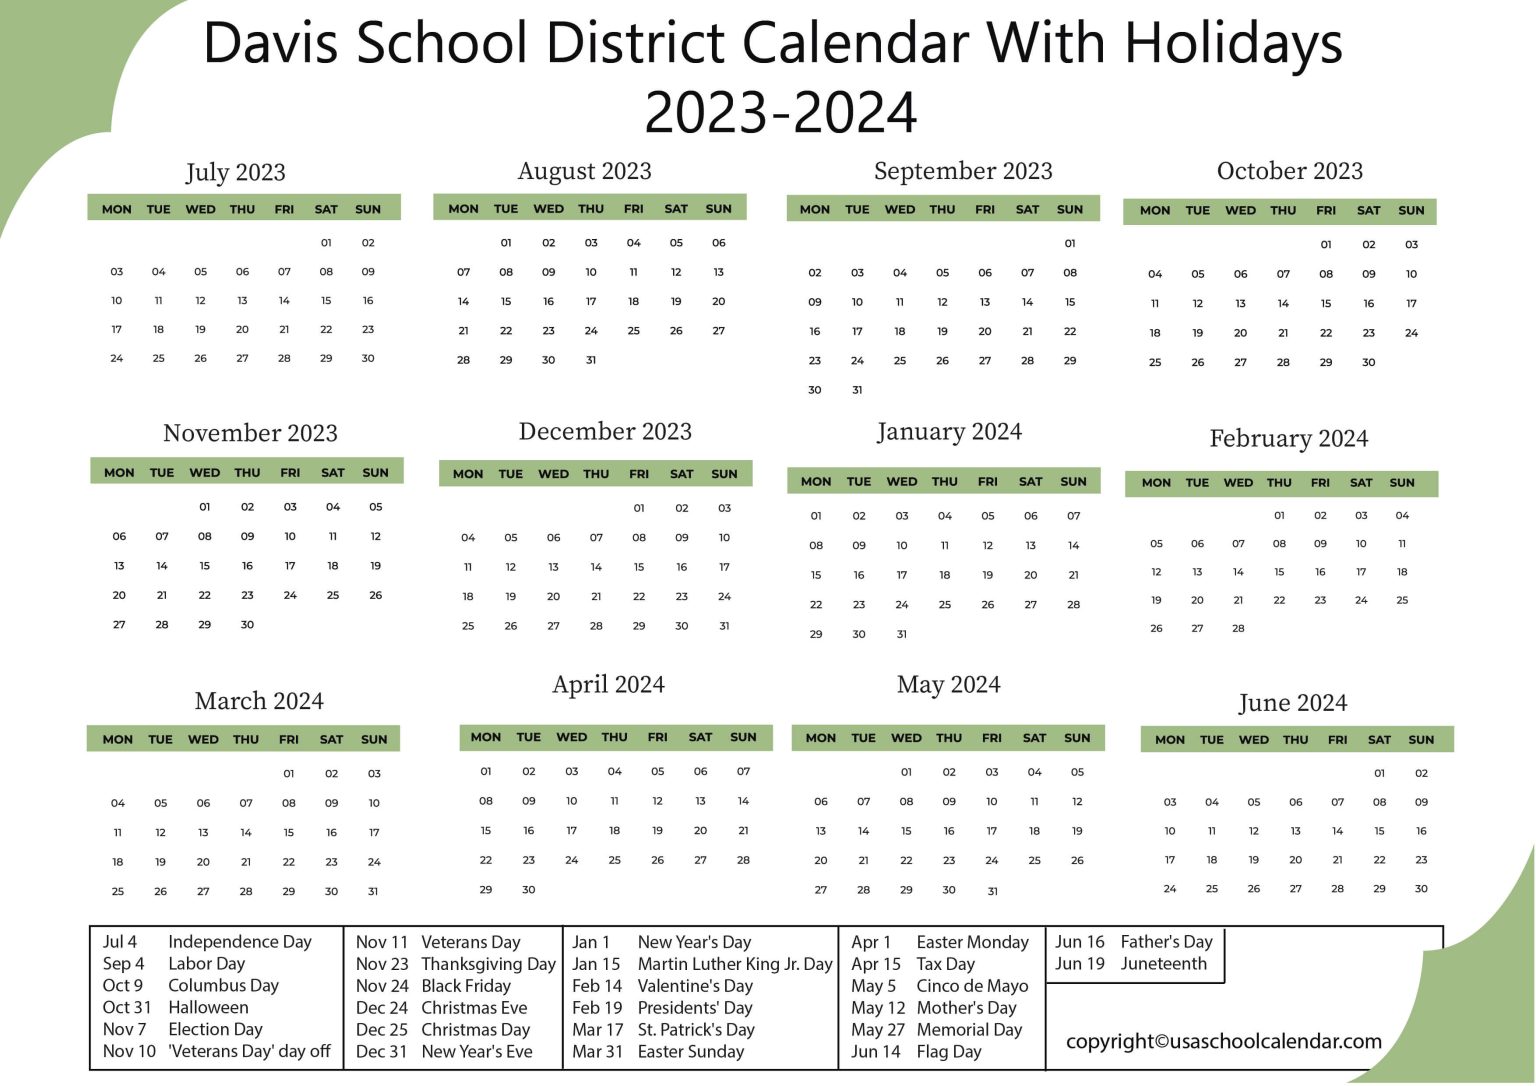 Davis School District Calendar with Holidays 2023-2024